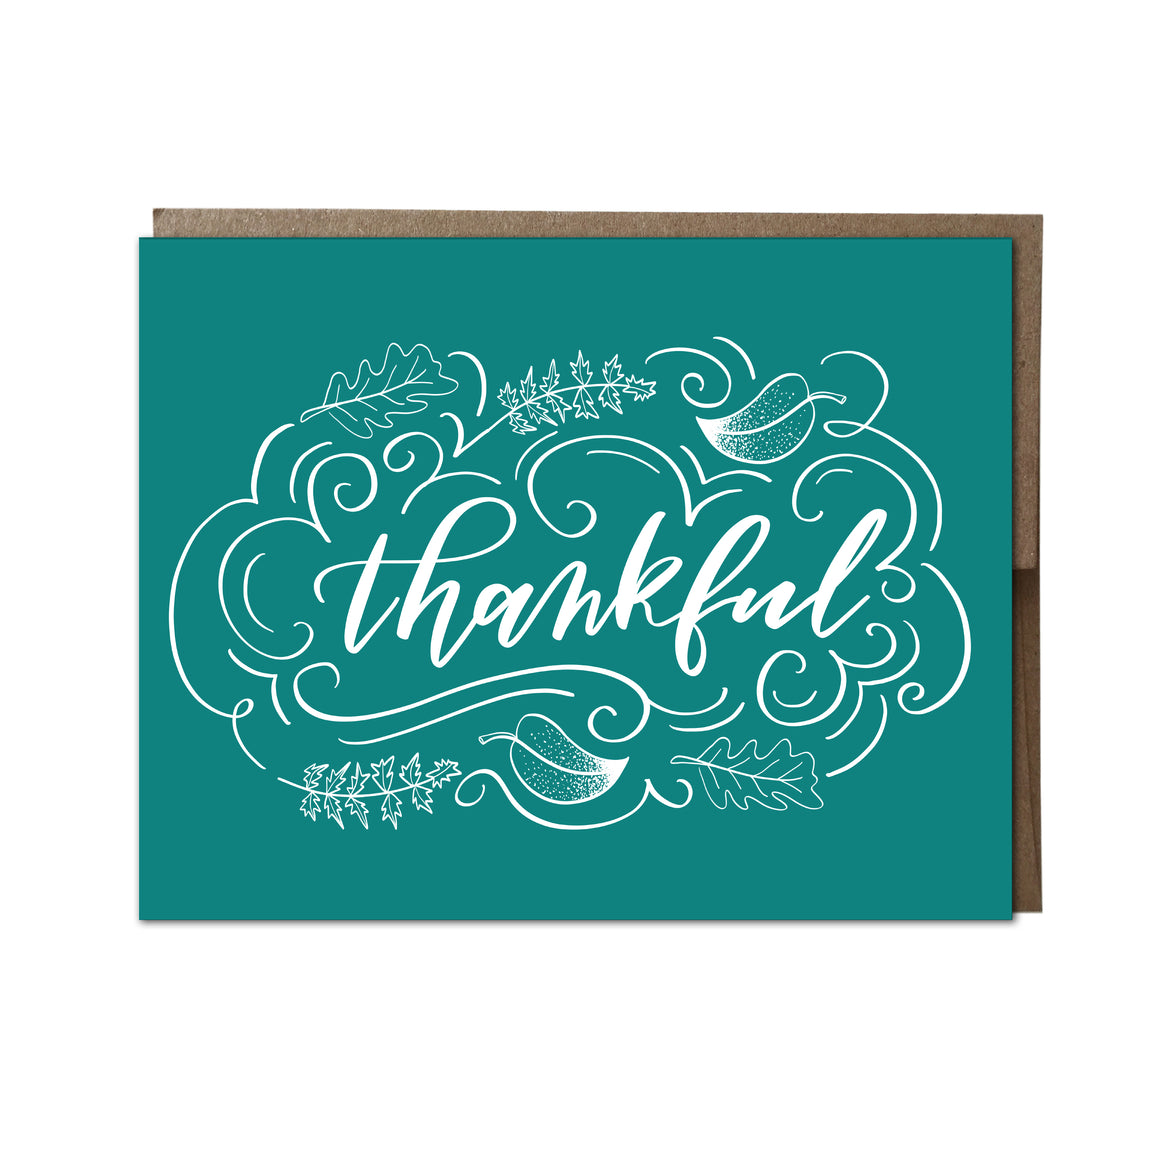 "Thankful" card